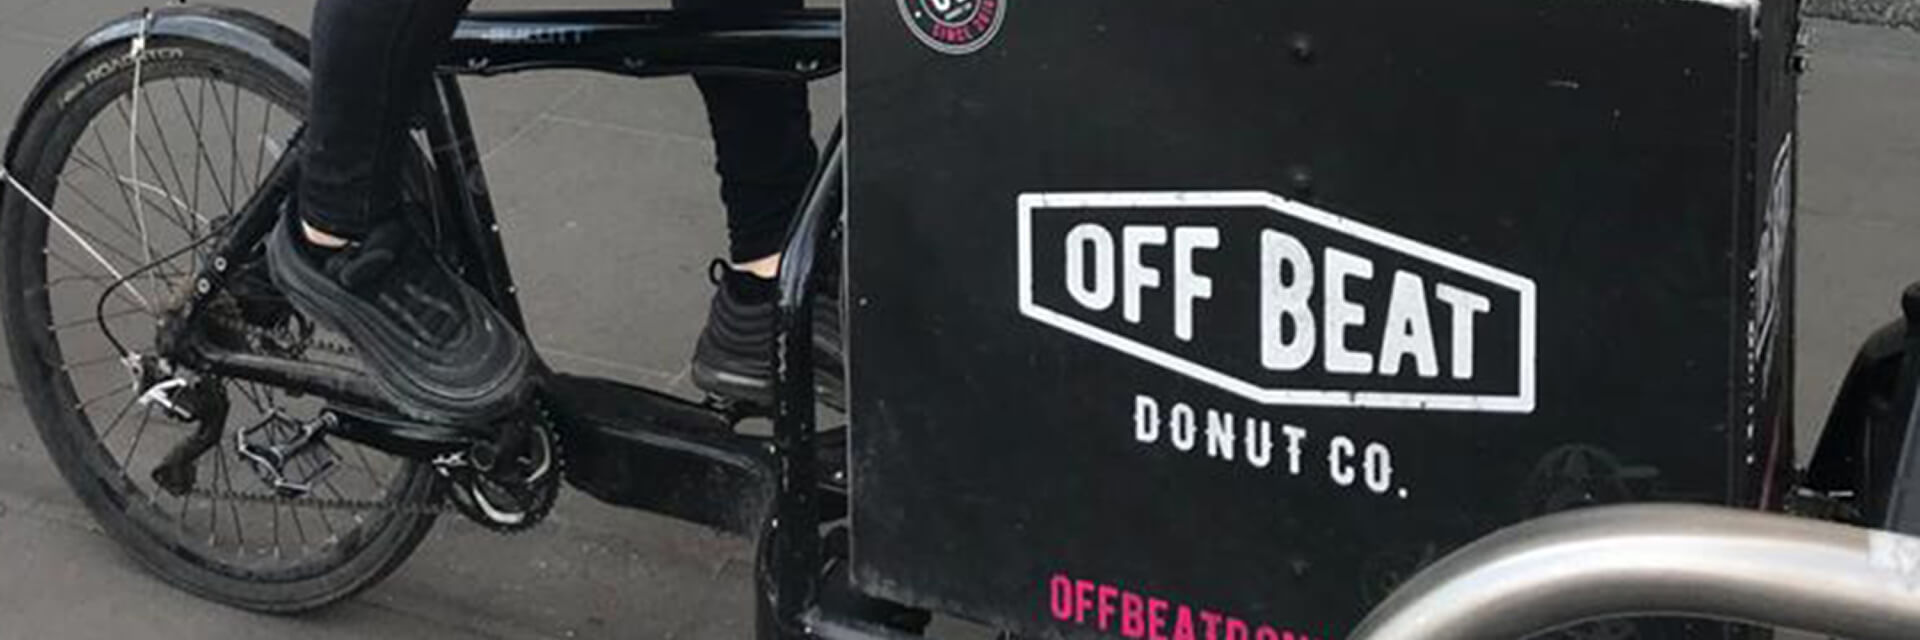 OffBeat Donut Co. Deliveries Bike